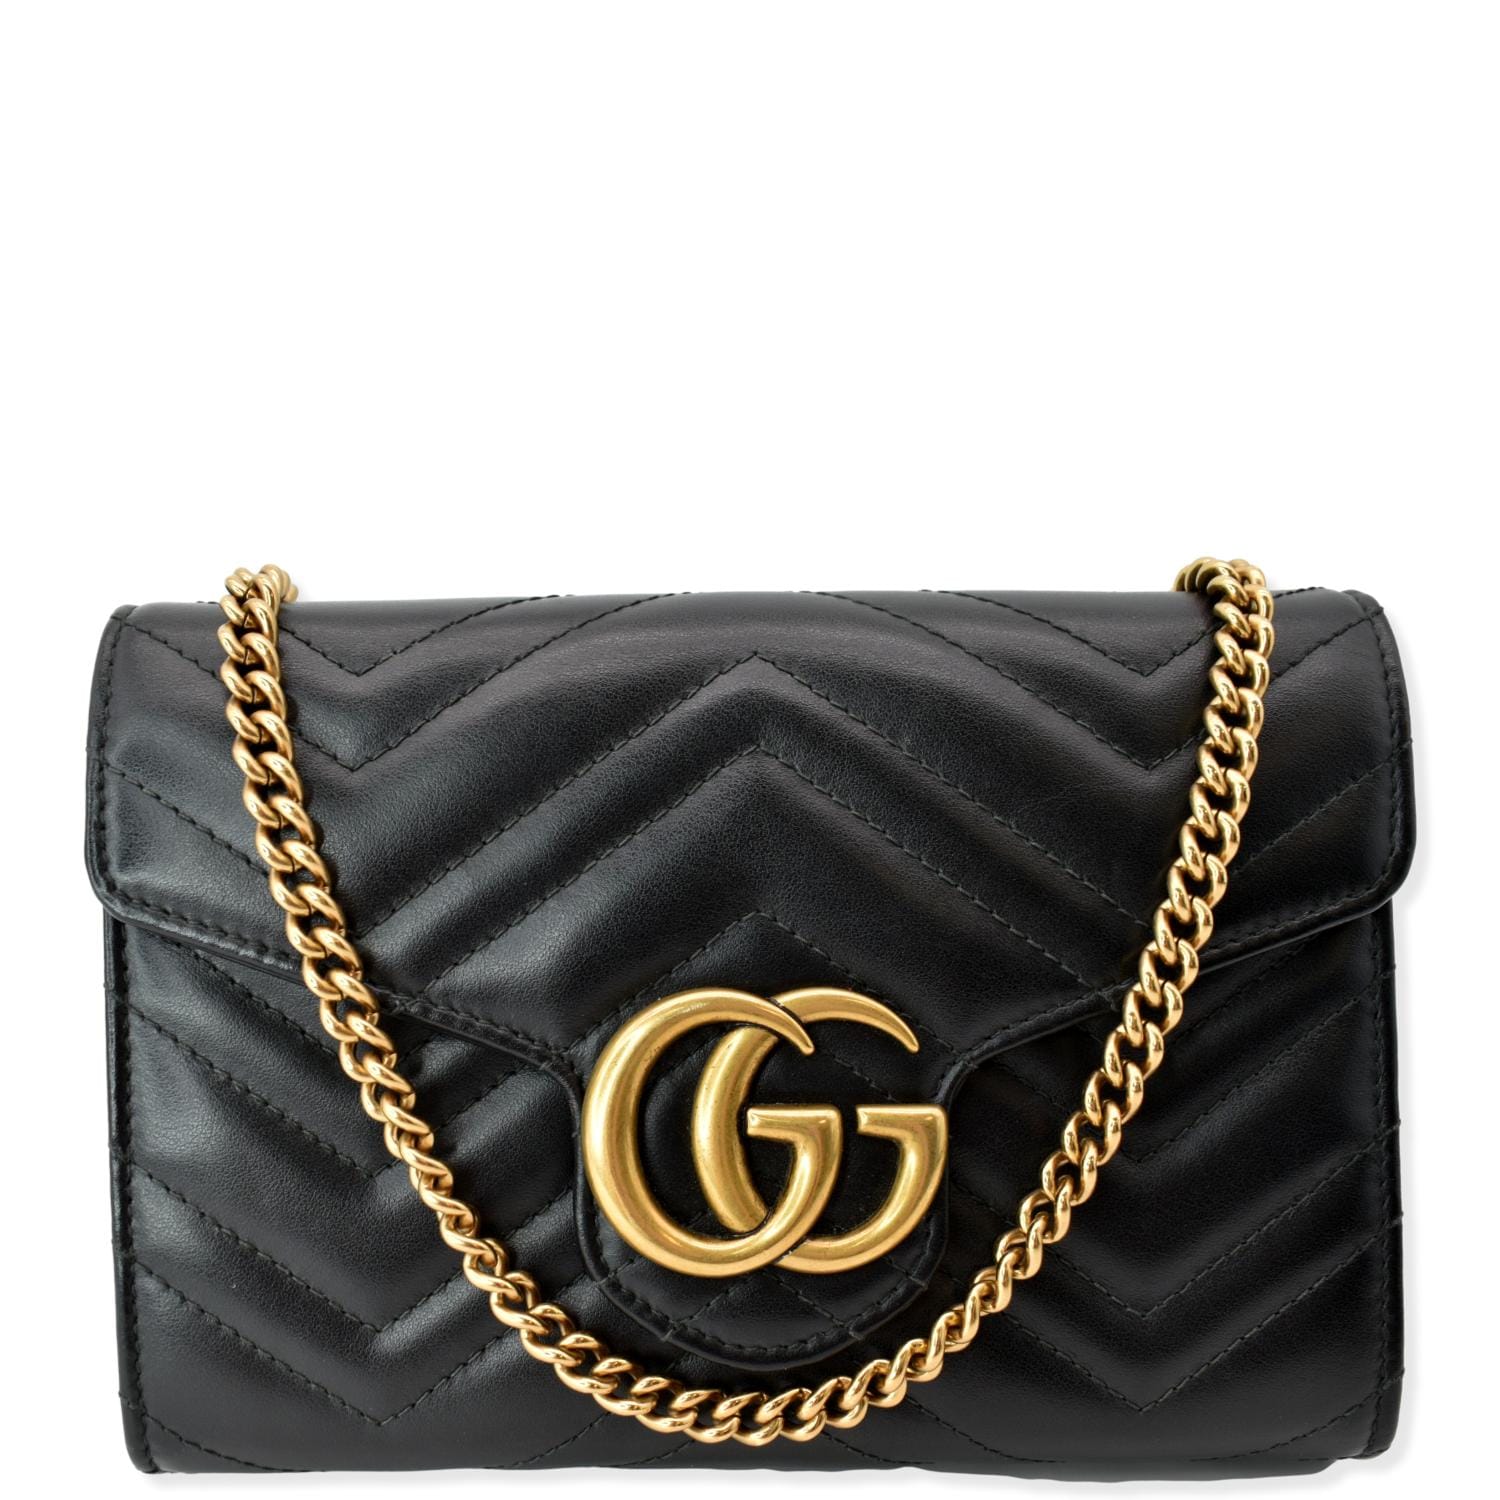 Gucci Gg Marmont Matelassé Leather Shoulder Bag in Natural